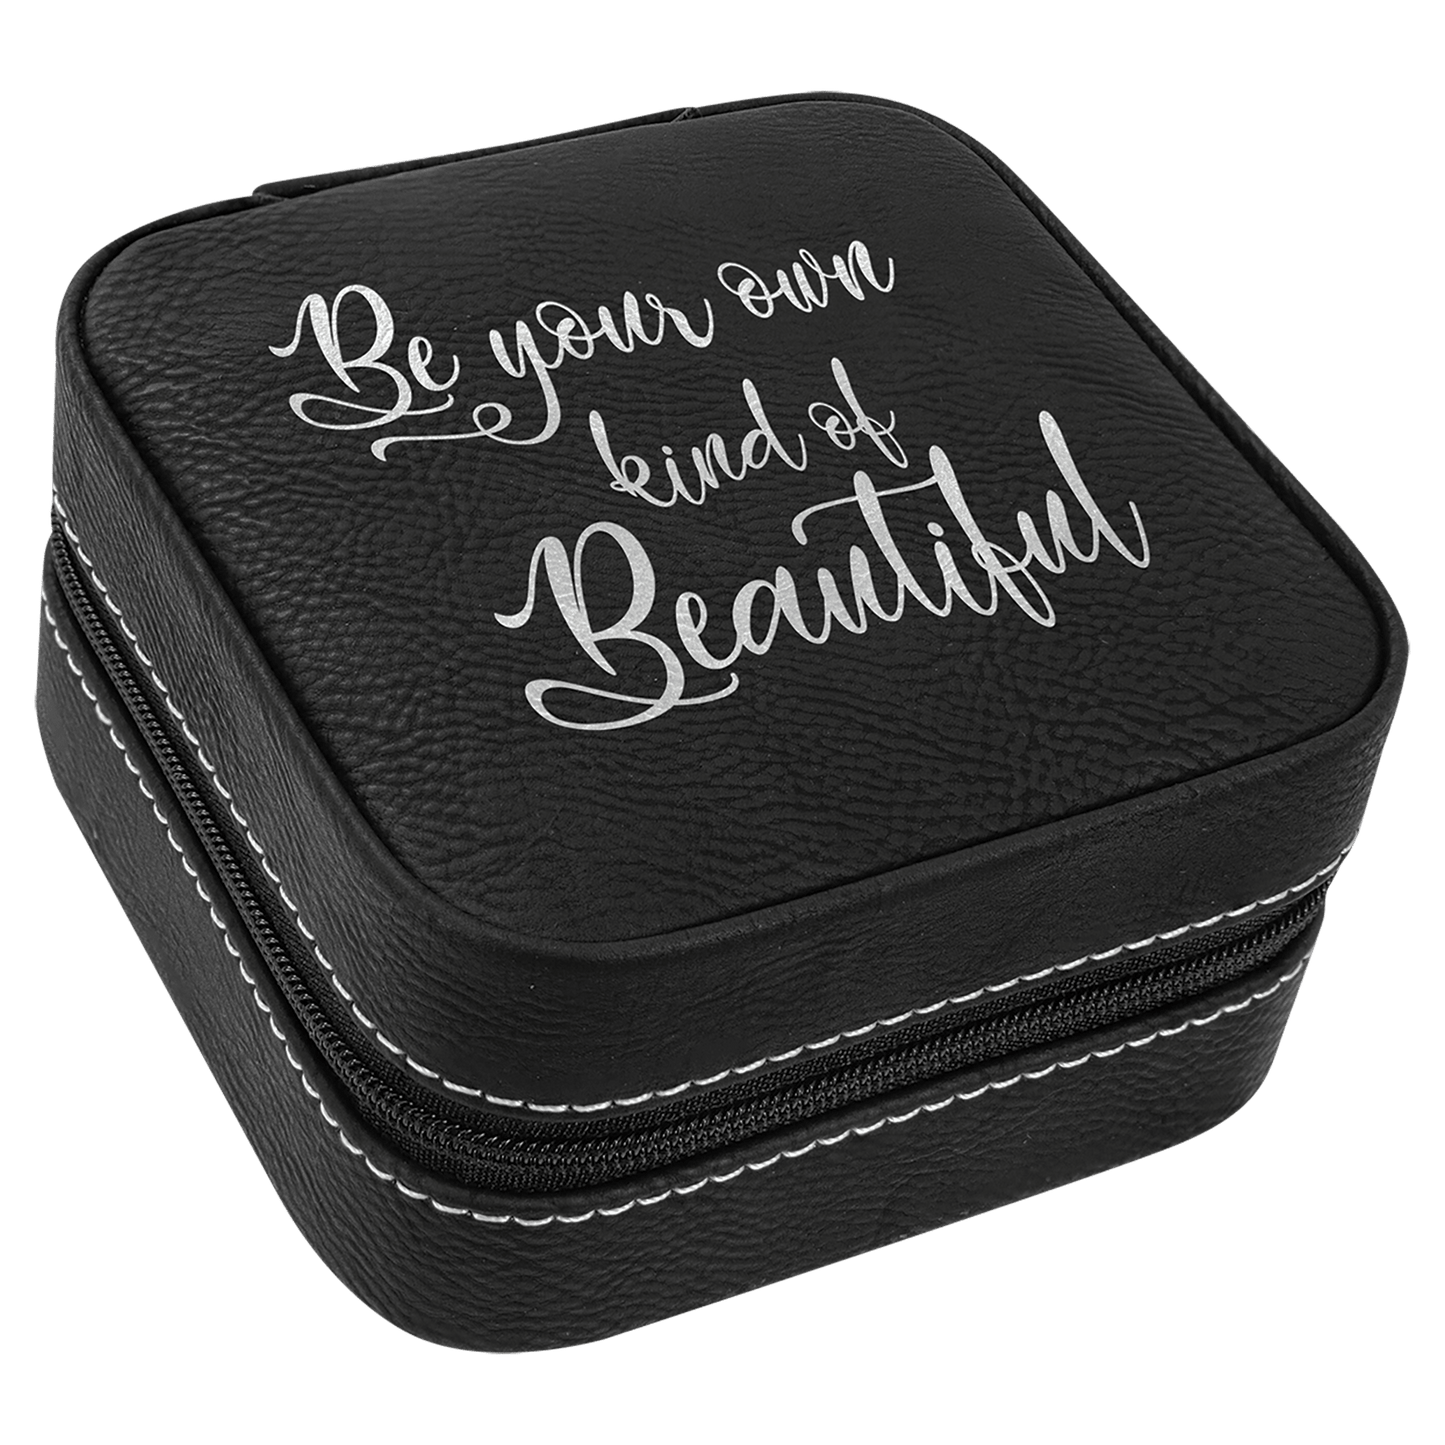 4" X 4" Laserable Leatherette Travel Jewelry Box